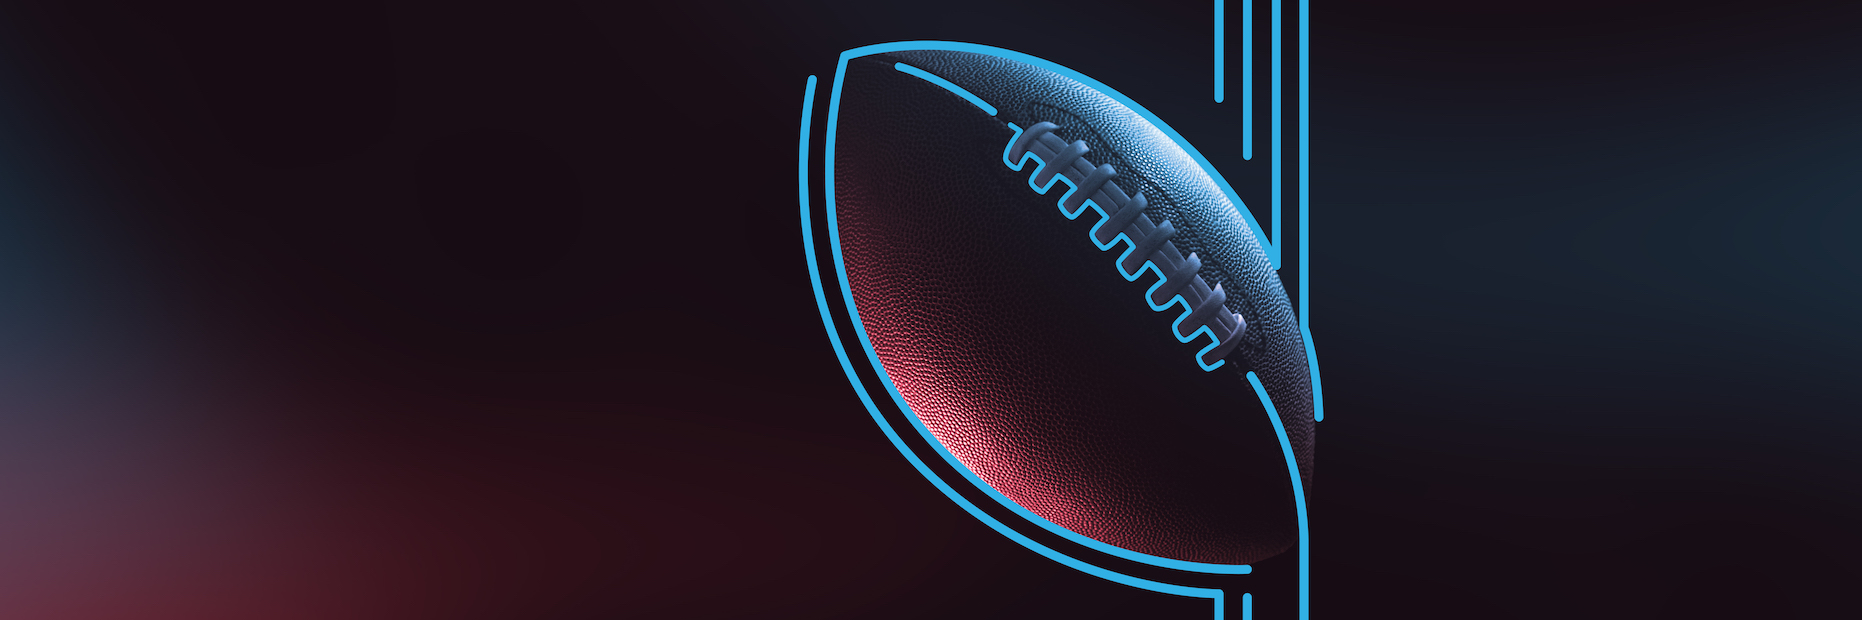 Brand Bowl 2021 Ad Tracker: Bud Light